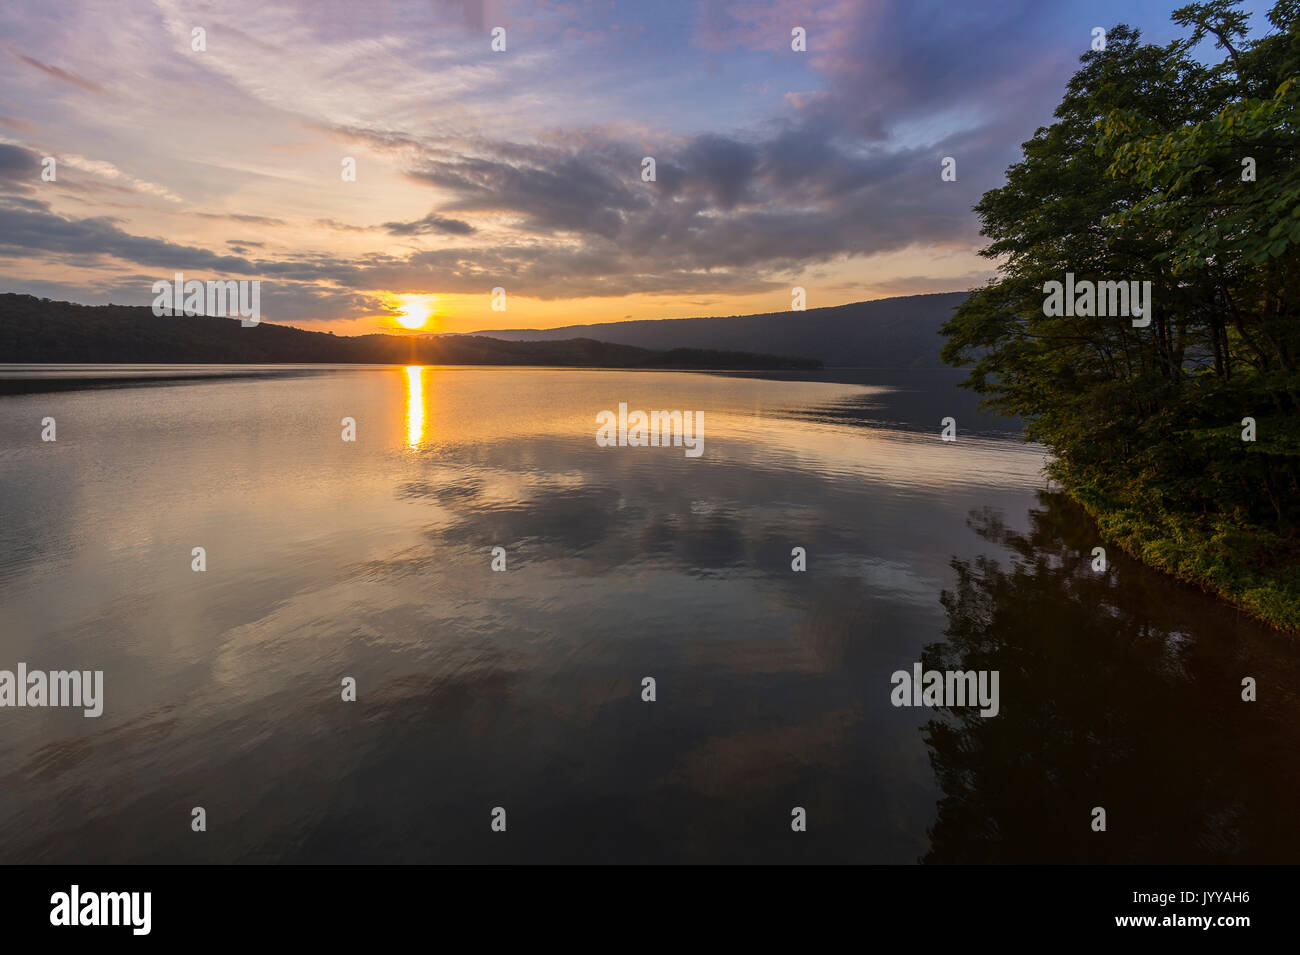 Sunrise On Beautiful Calm Mountain Lake Stock Photo